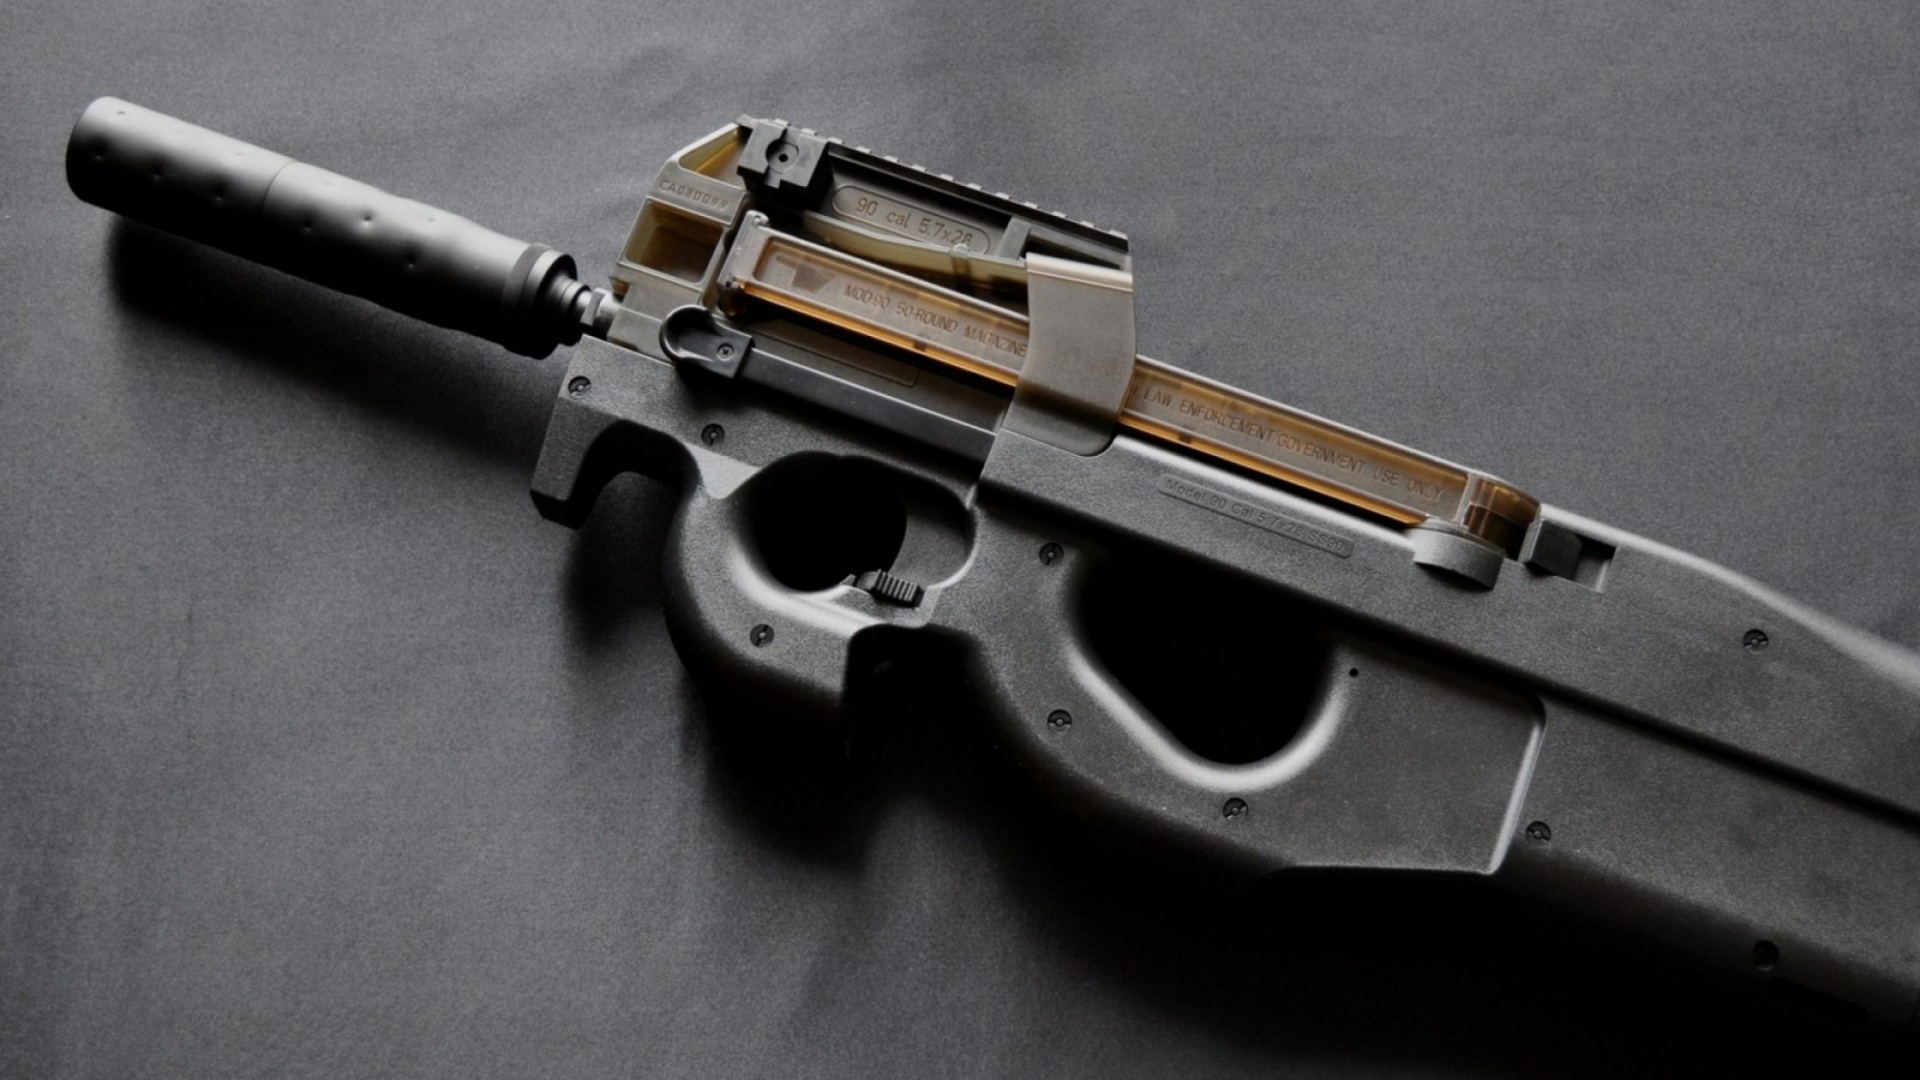 FN P90, Submachine Gun, fn Herstal, Gun, Firearm. Wallpaper in 1920x1080 Resolution